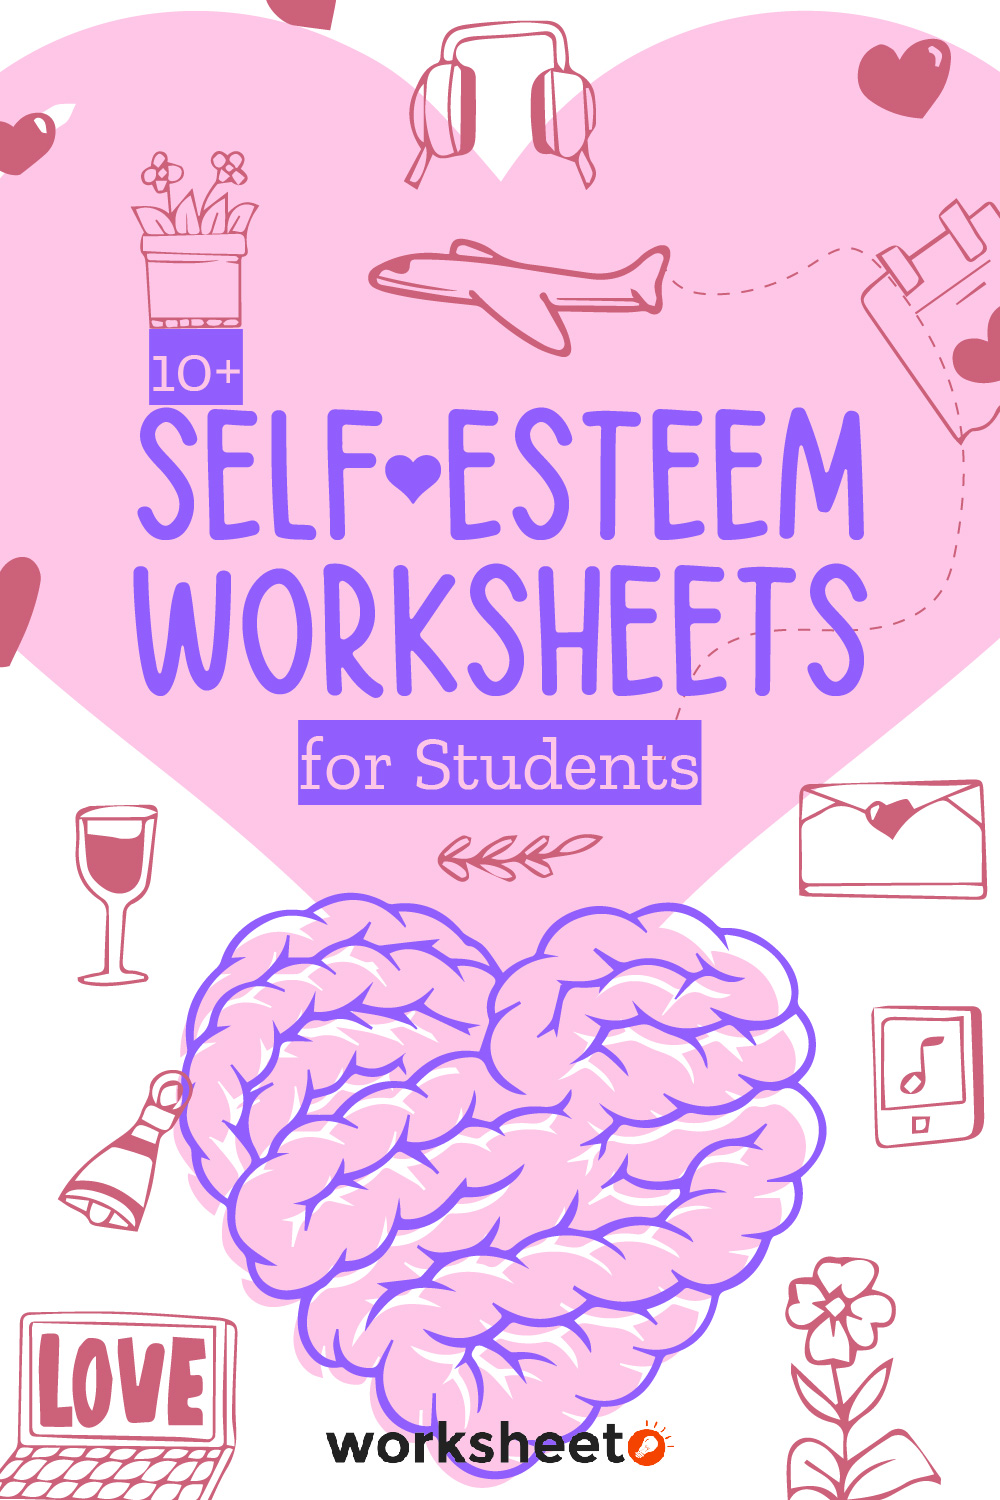 13 Images of Self-Esteem Worksheets For Students